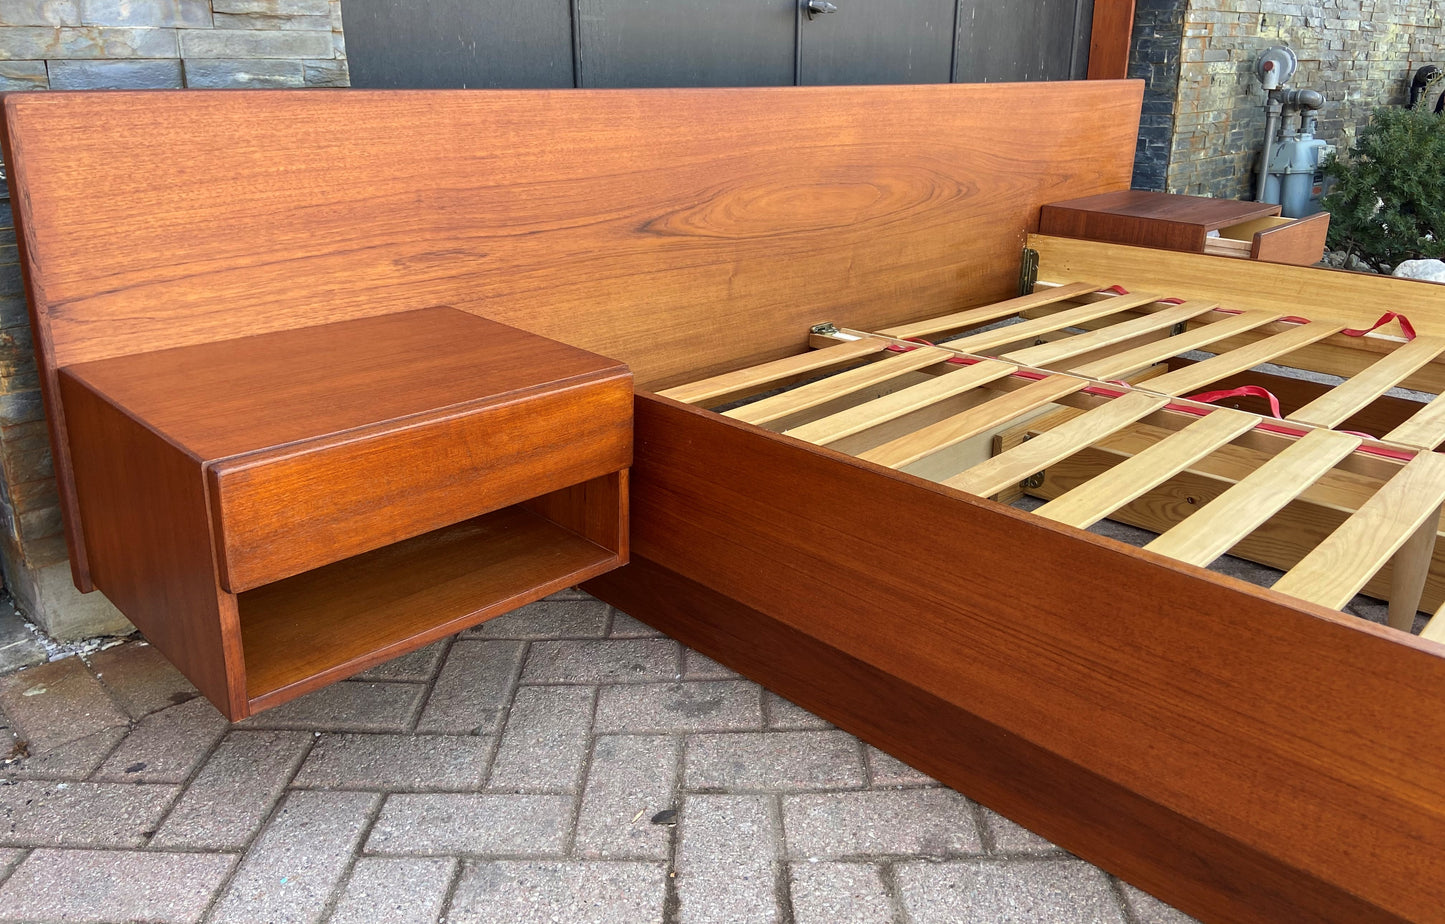 REFINISHED Danish Queen MCM Teak Platform Bed w floating nightstands & storage drawer, PERFECT